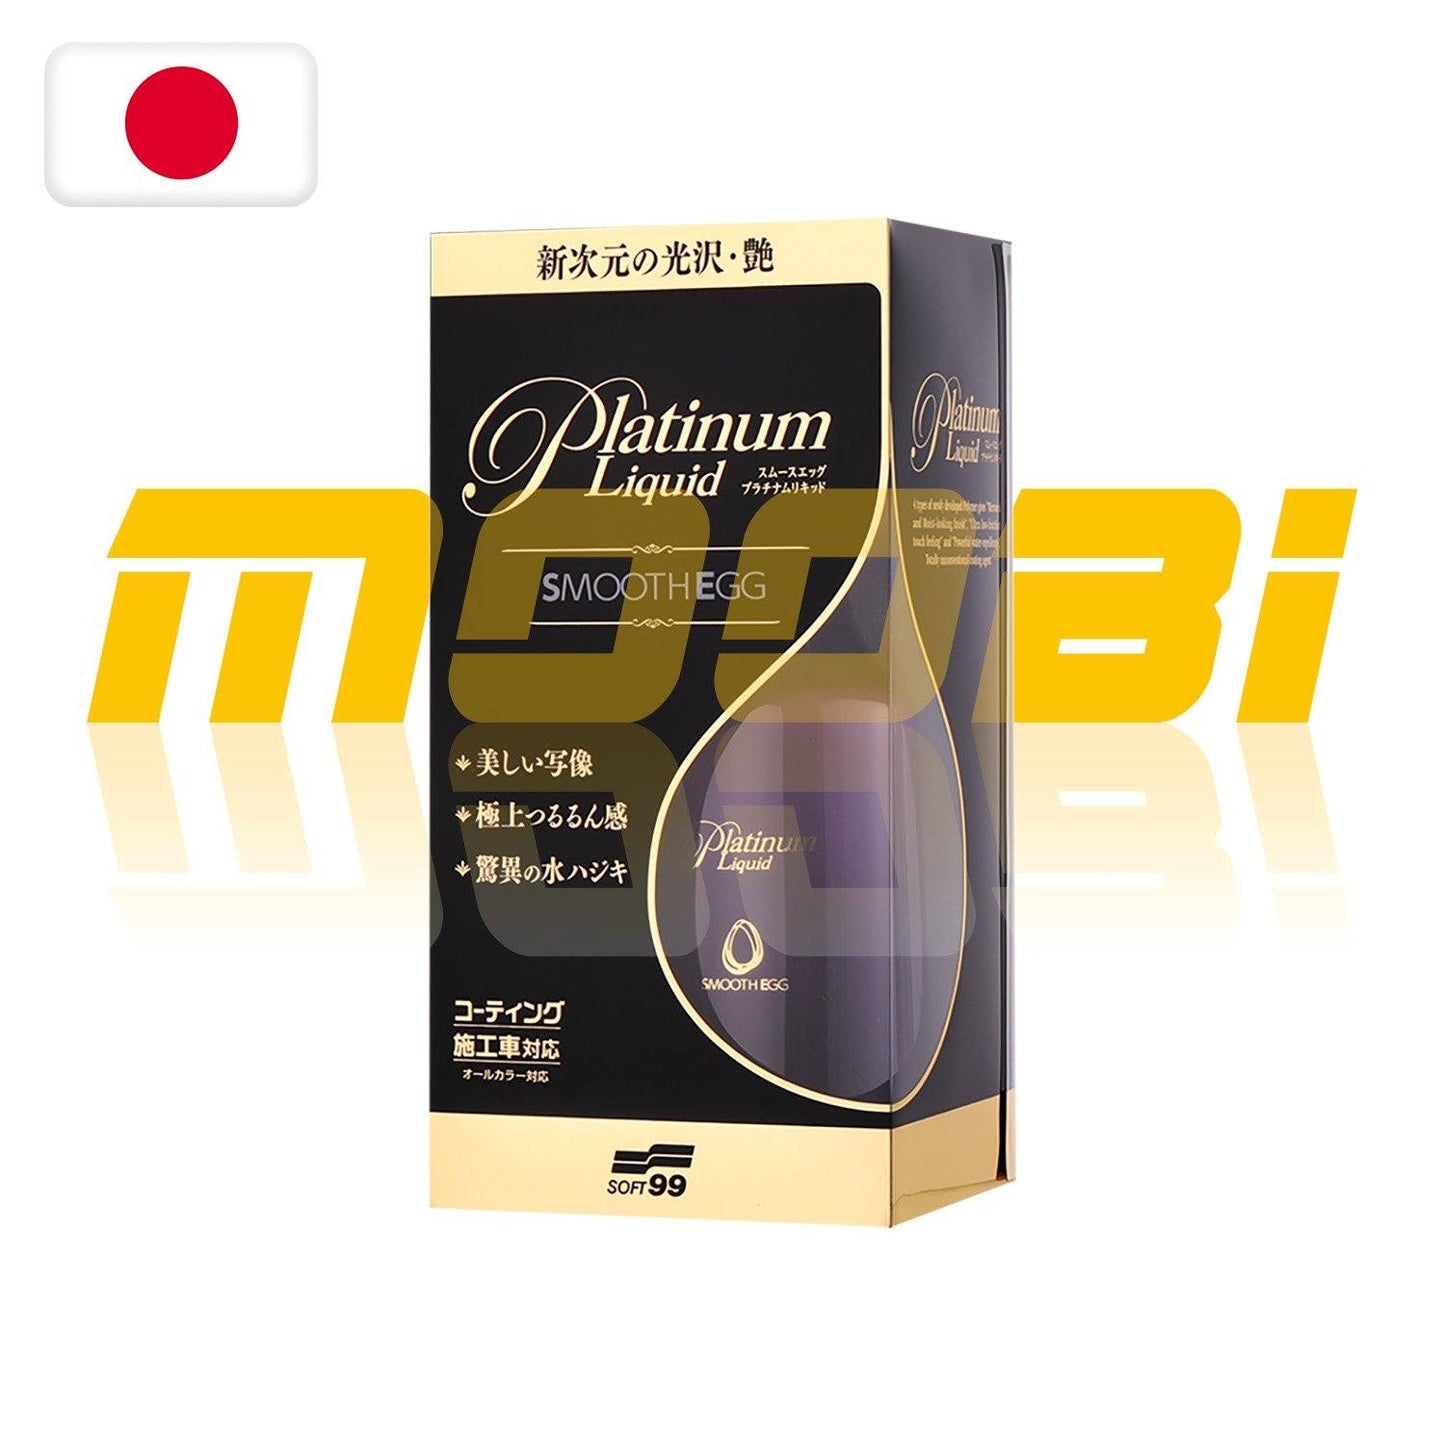 SOFT99 | Smooth Egg Platinum Liquid 速效鍍膜劑 | 日本製 | MOOBI 香港網上汽車用品專門店 p1